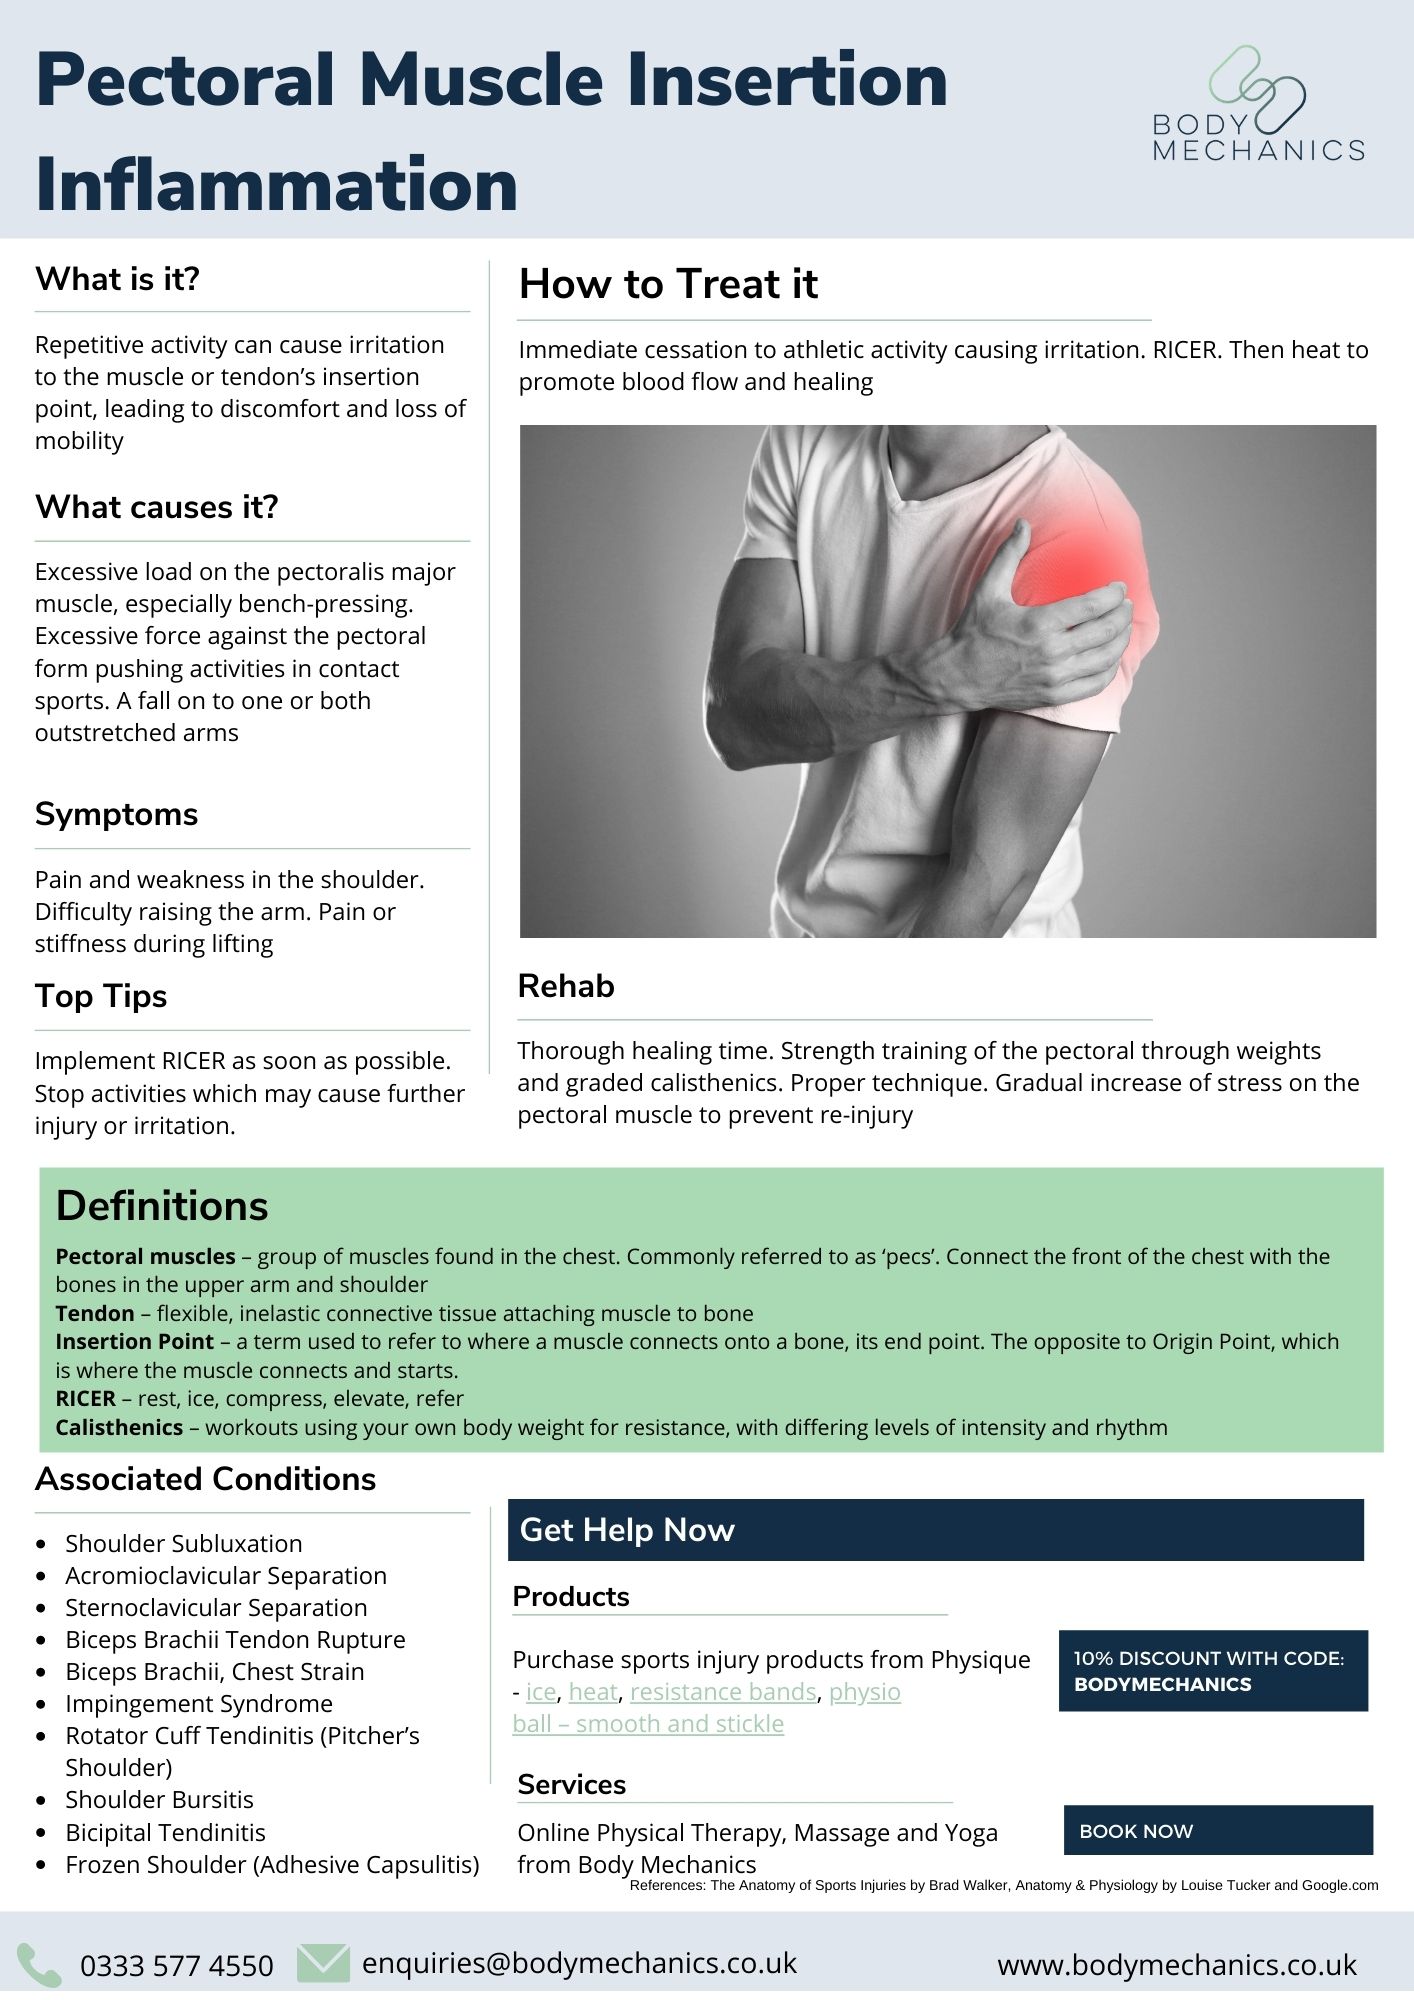 Pectoral Muscle Insertion Inflammation Infosheet